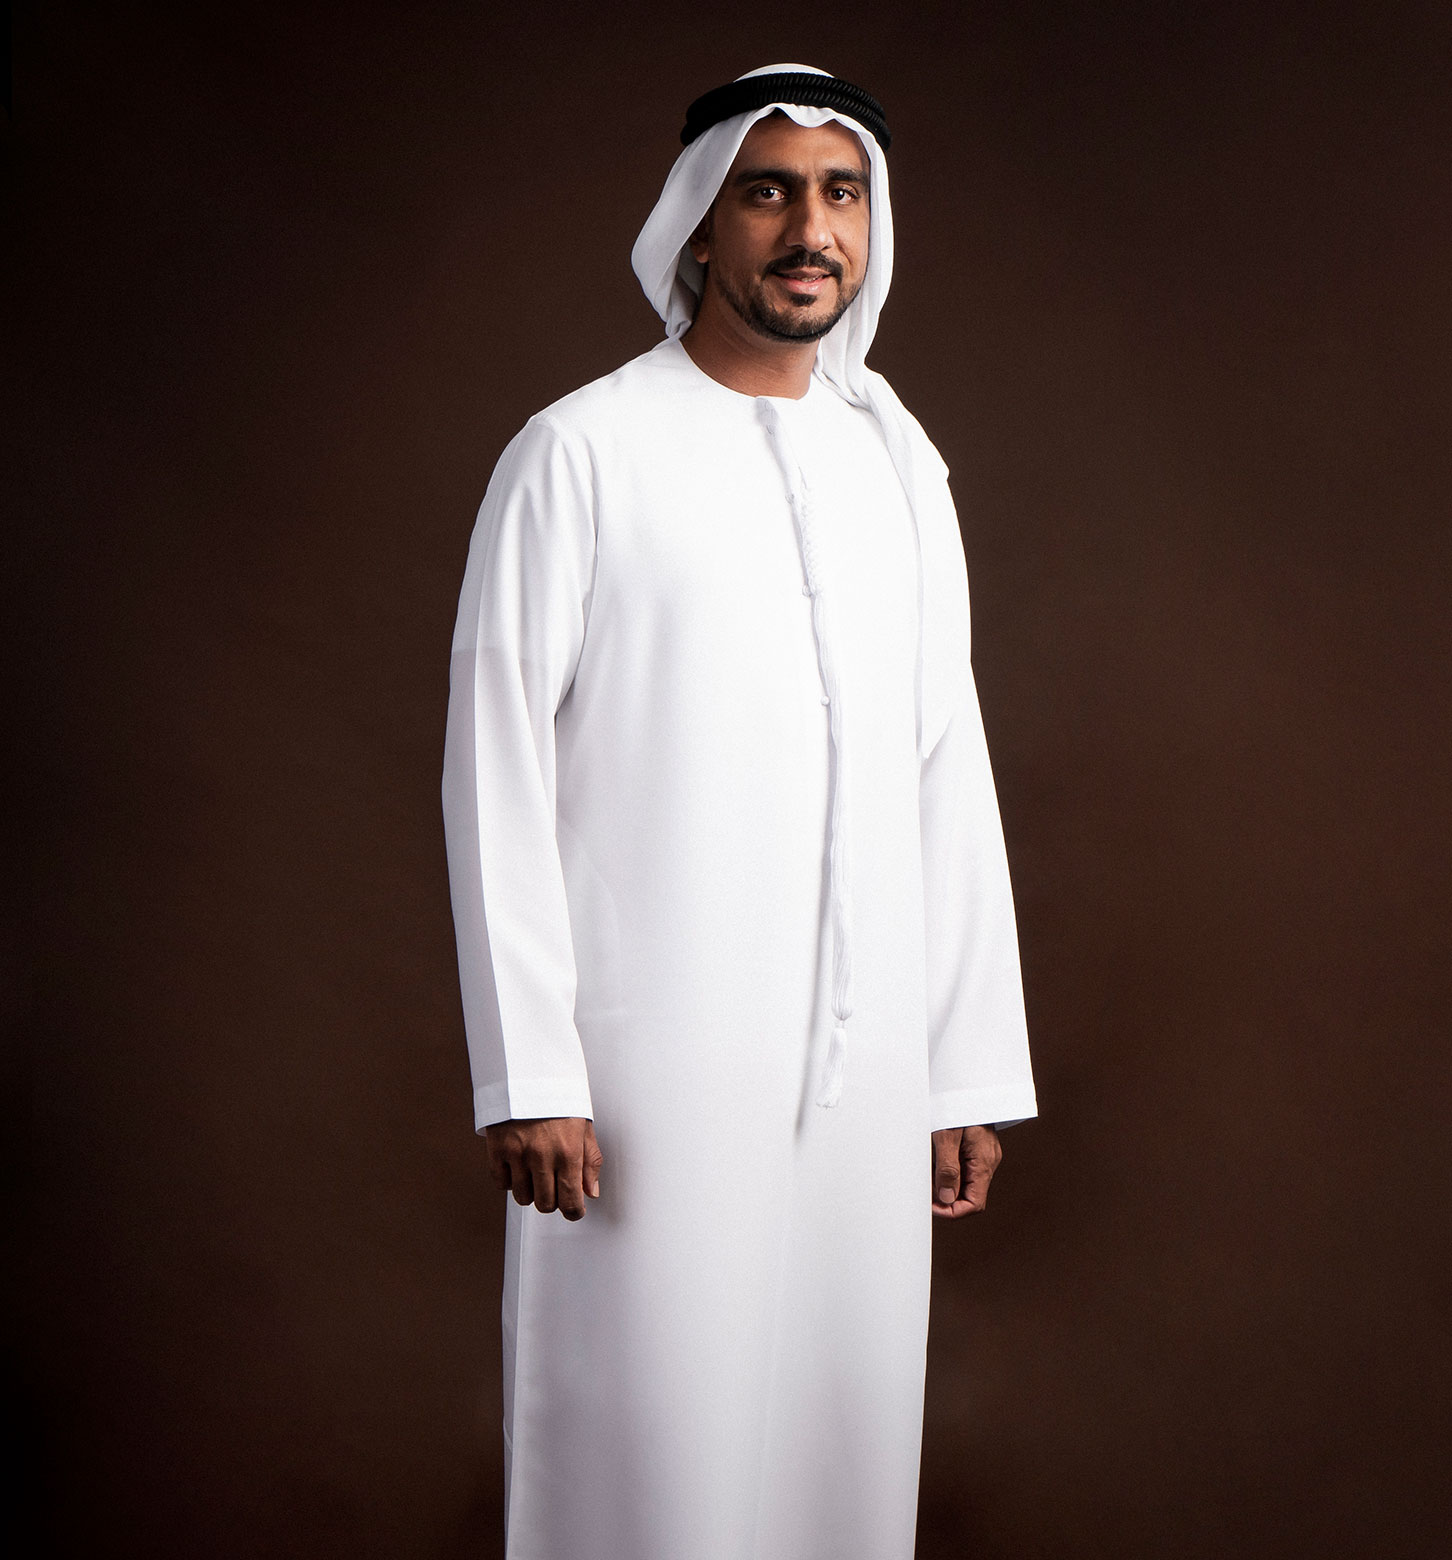 Chief Human Capital Officer, Hassan Abdulmagied Seddiqi